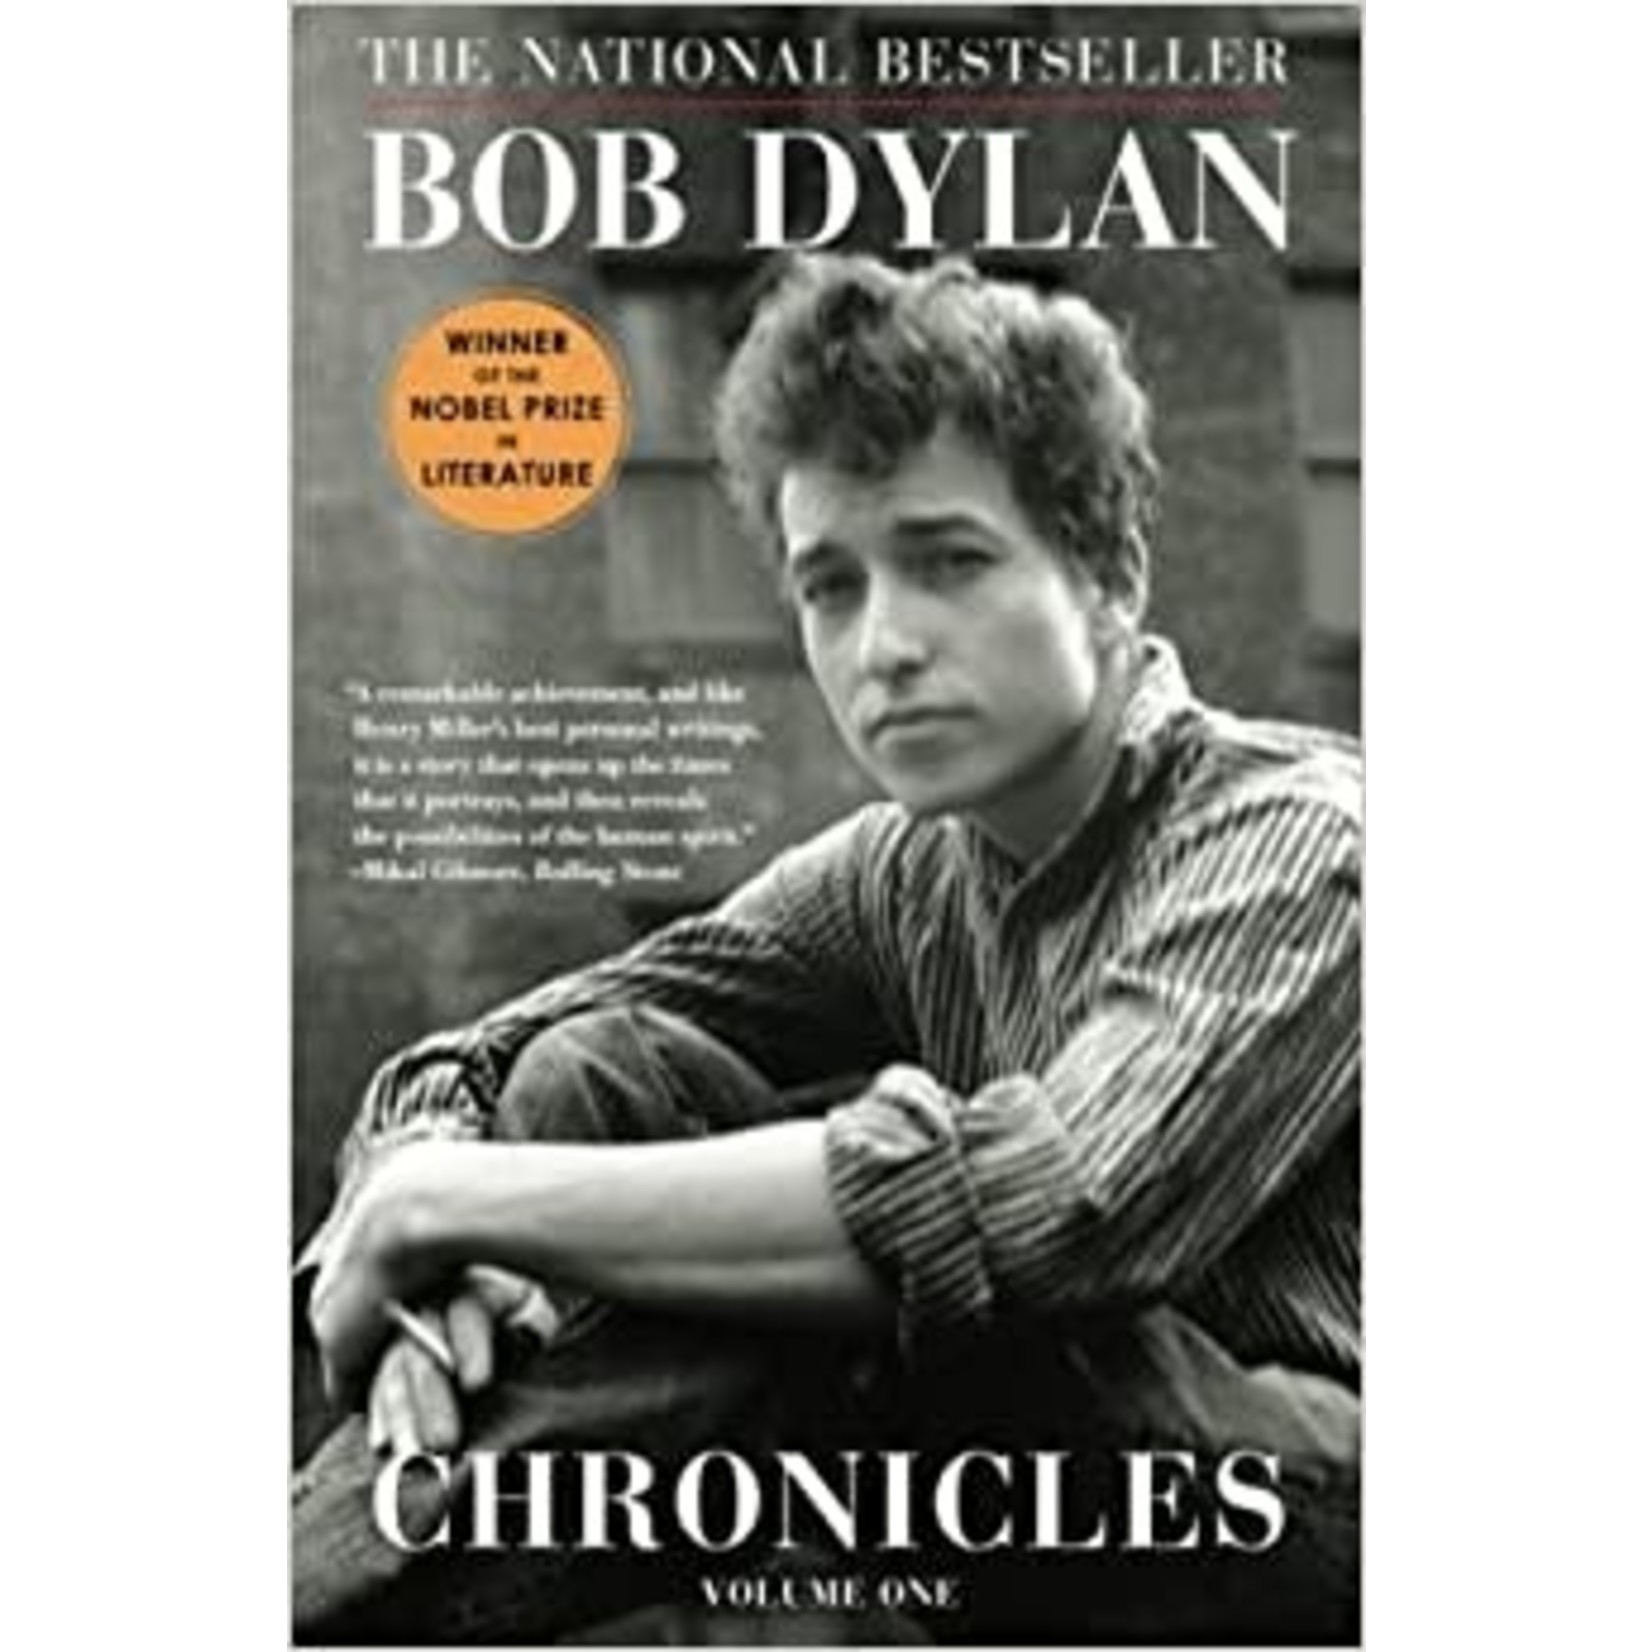 Bob Dylan - Chronicles: Volume One [Book]